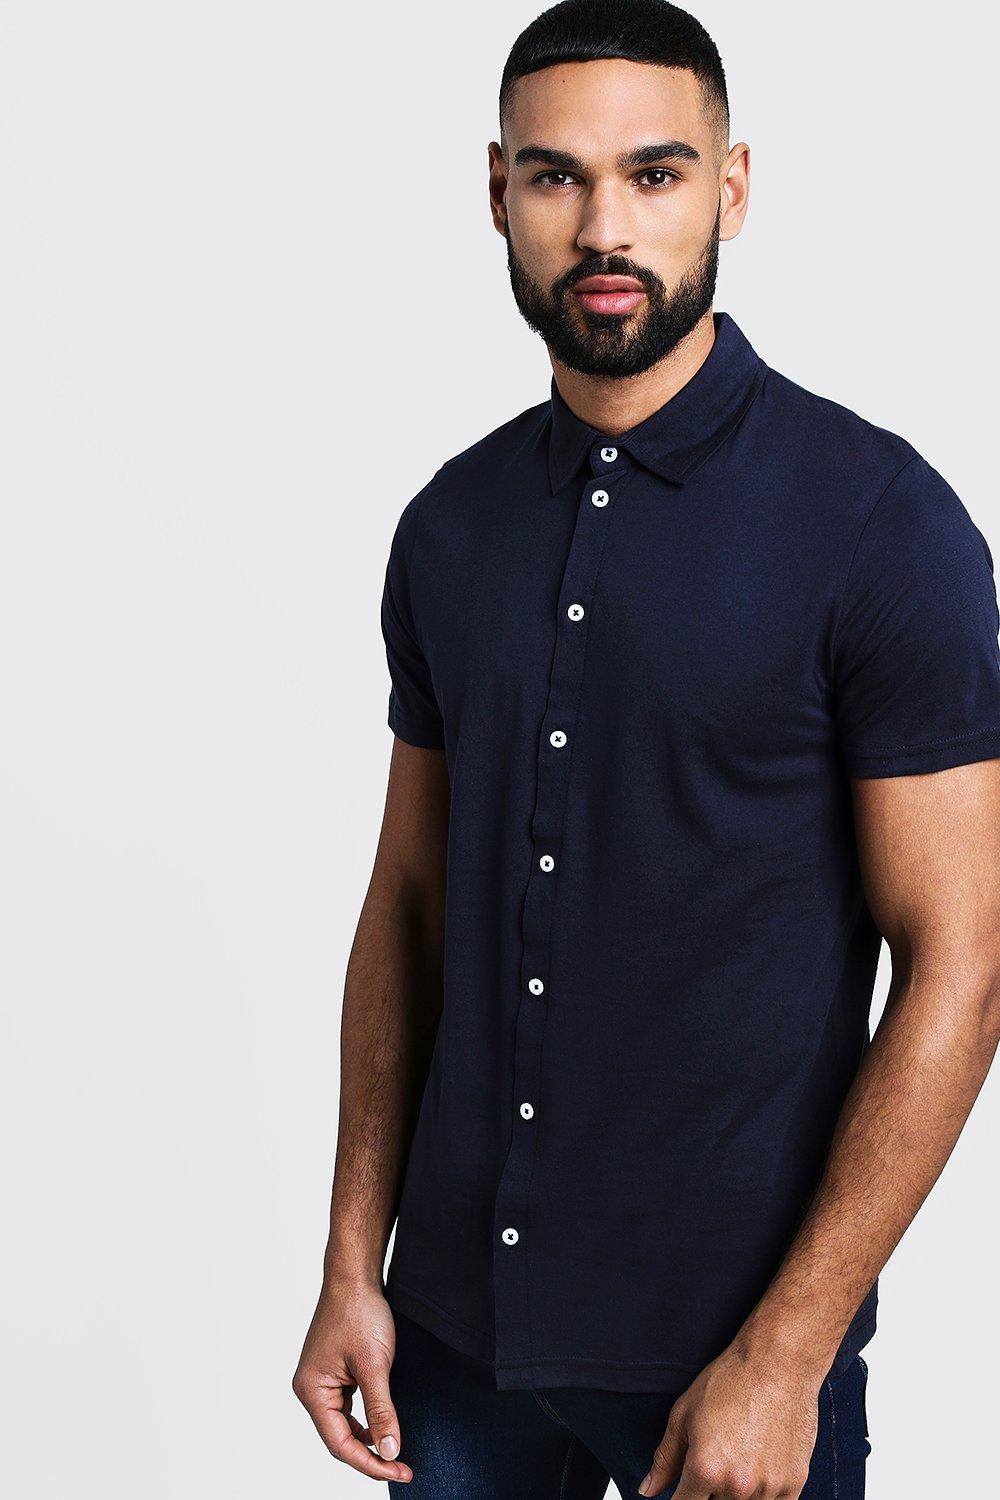 Lyst - BoohooMAN Short Sleeve Jersey Shirt in Blue for Men